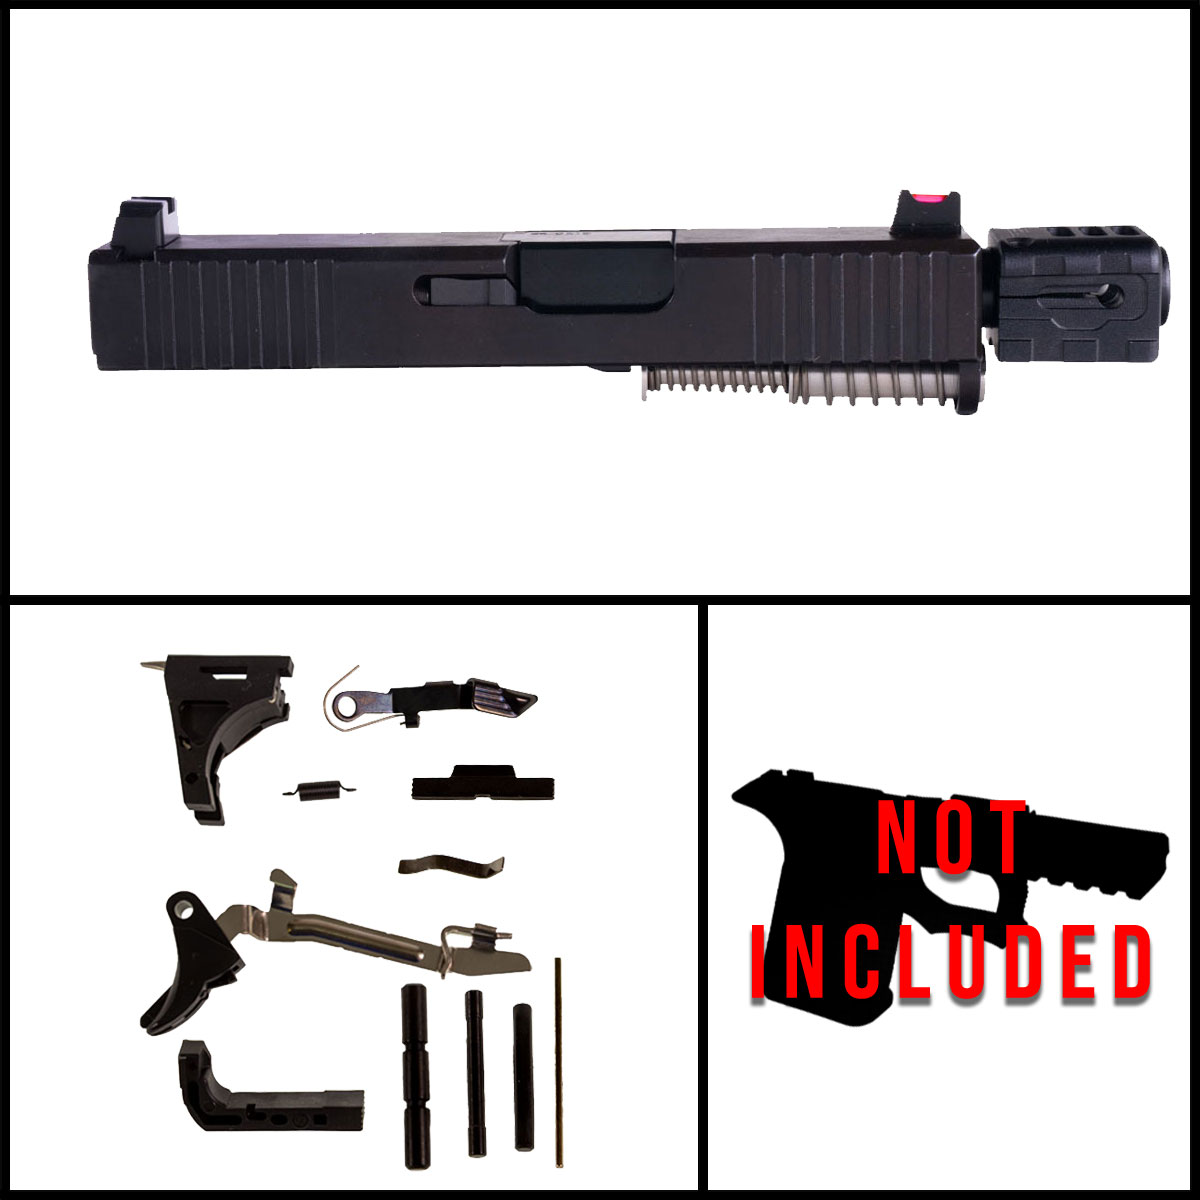 DTT 'Twenty-six w/ Strike Industries Compensator' 9mm Full Pistol Build Kit (Everything Minus Frame) - Glock 26 Gen 1-2 Compatible